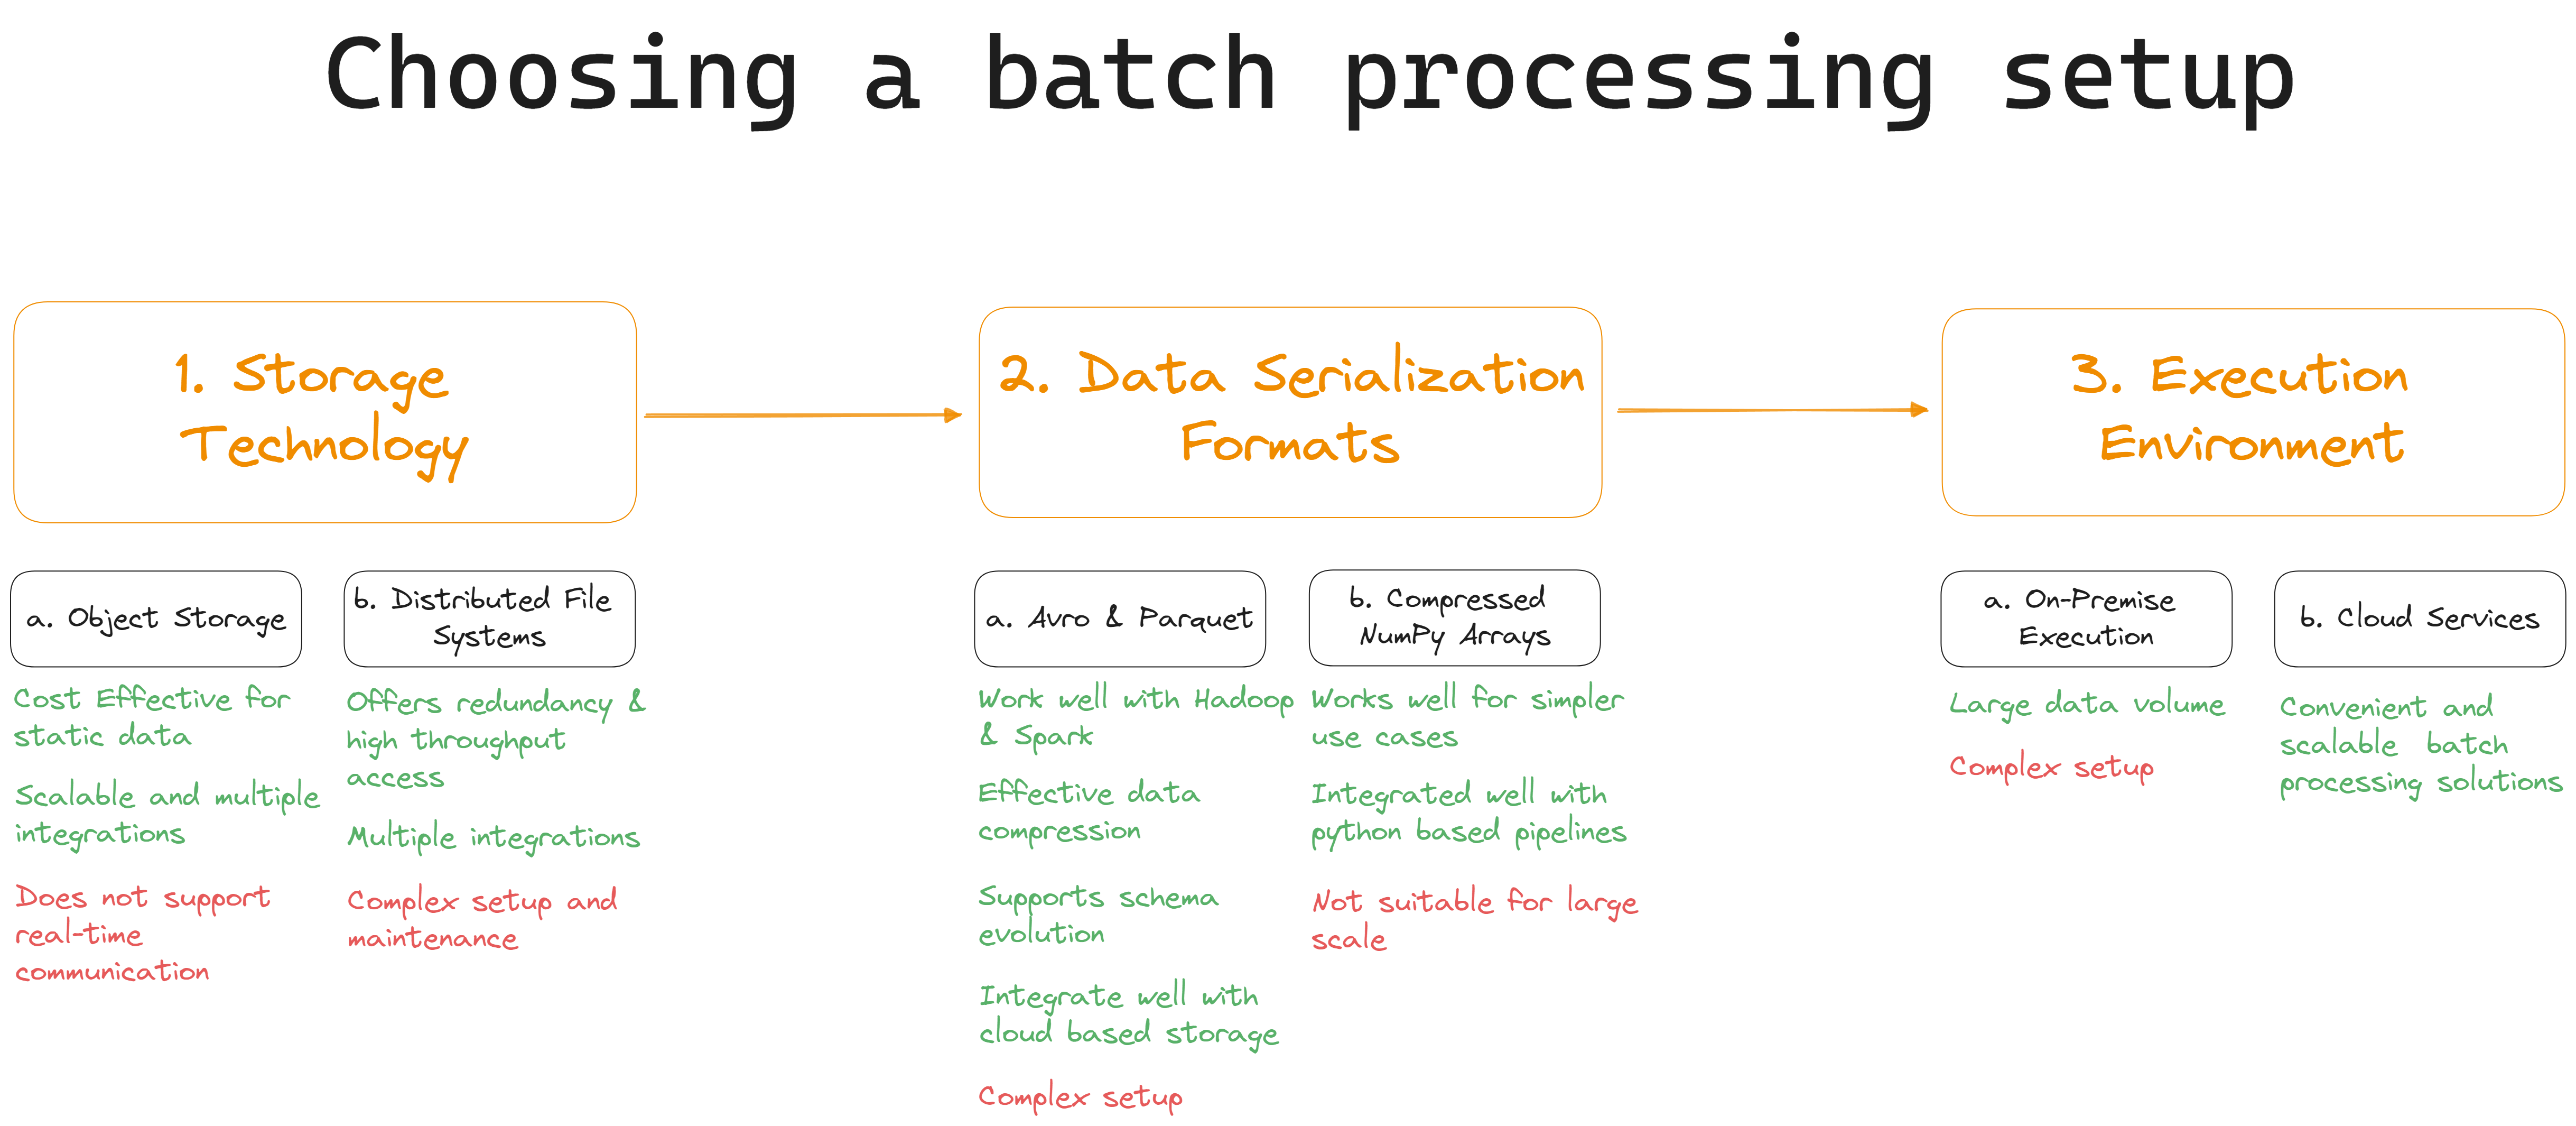 Choosing a batch processing setup